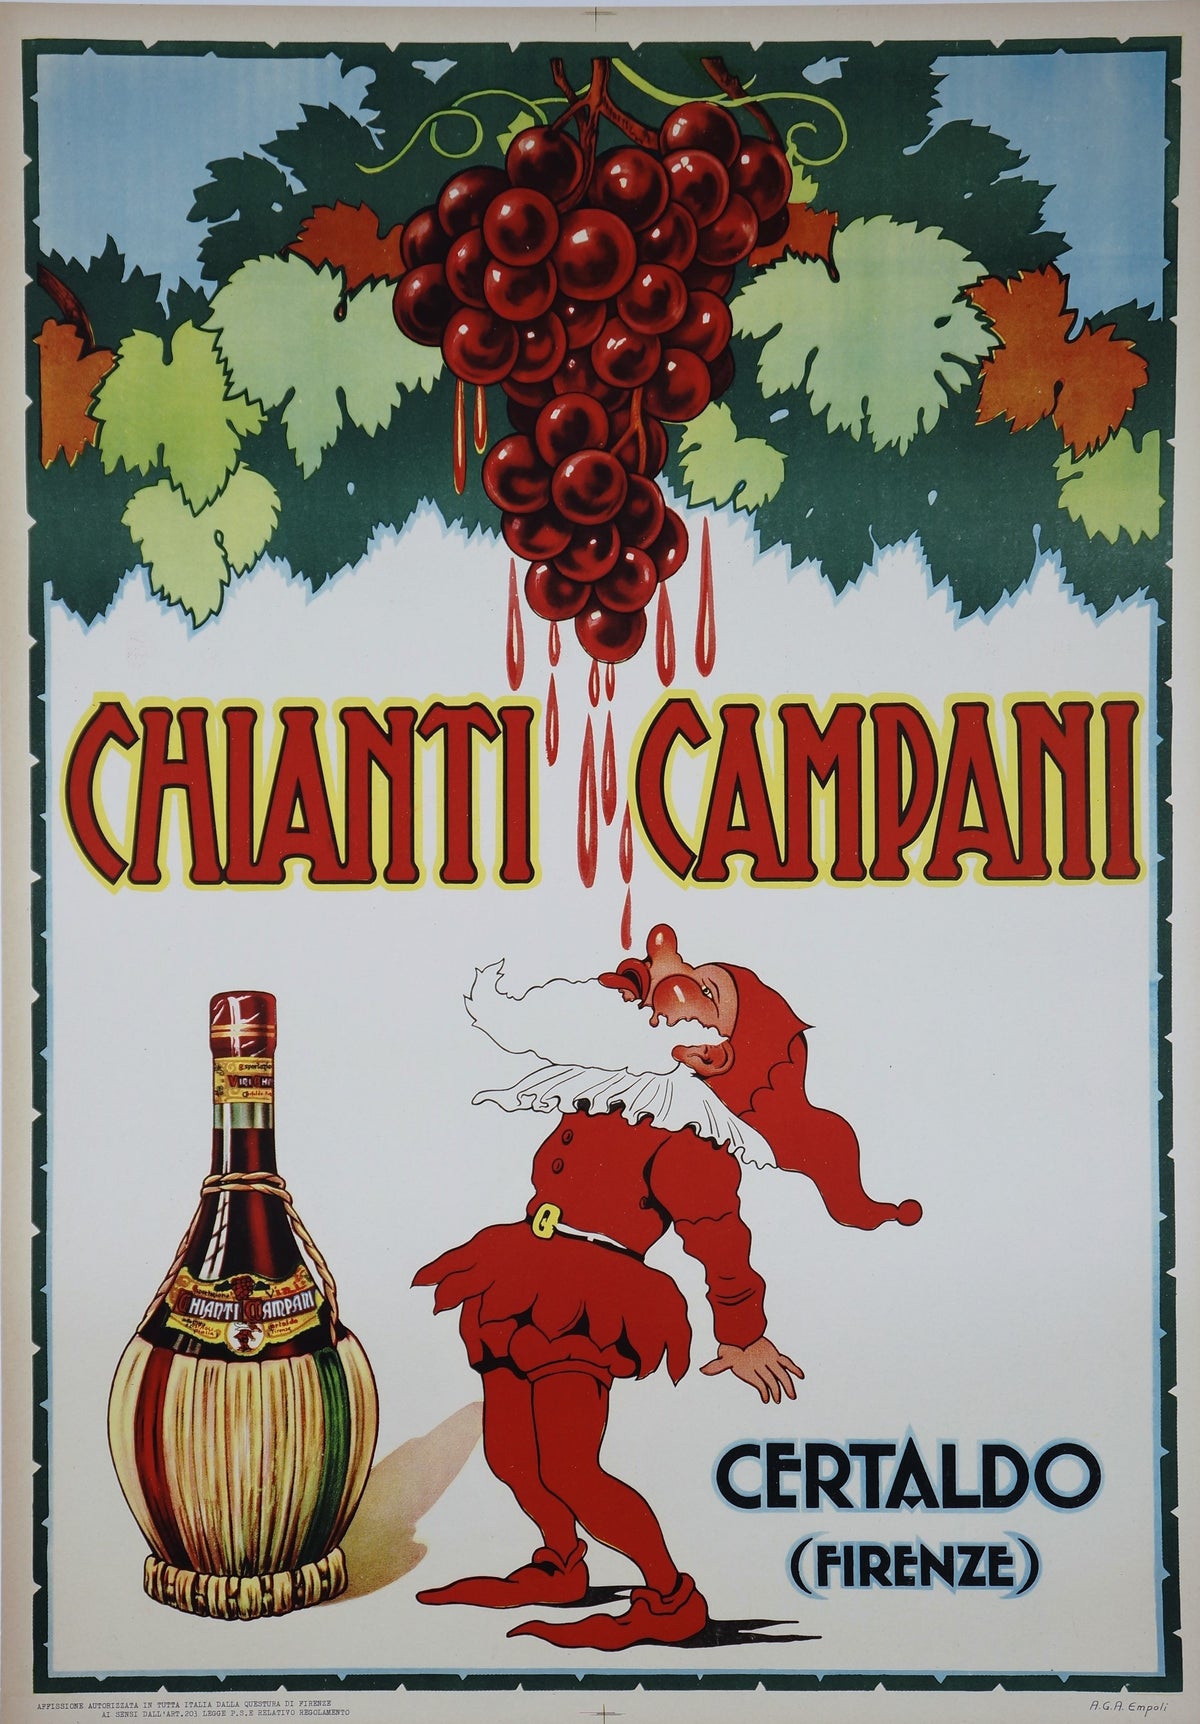 Chianti Campani - Authentic Vintage Poster